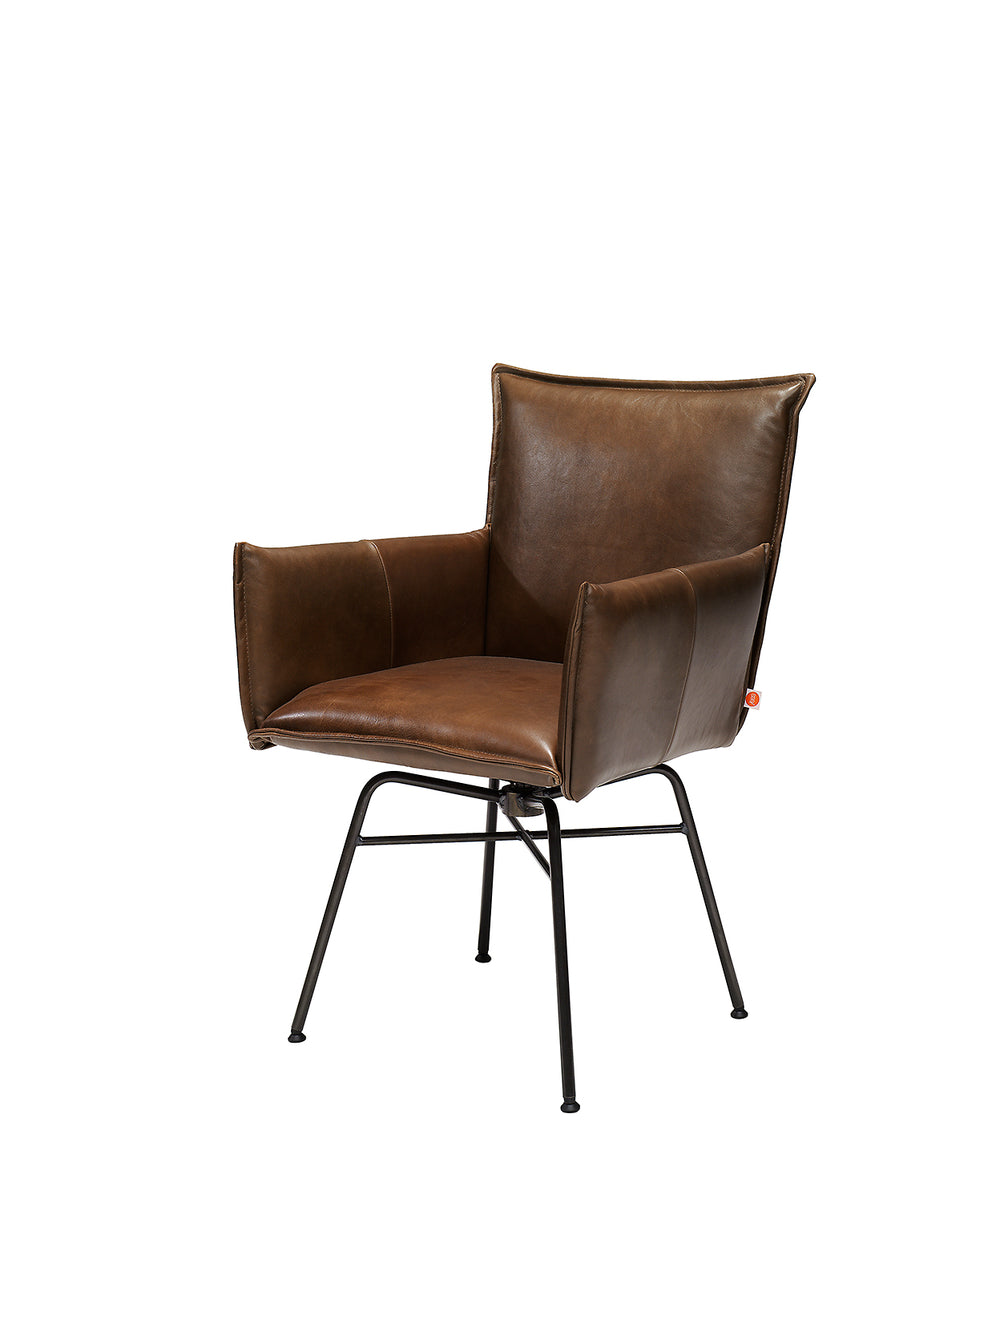 Sanne Swivel Chair - Old Glory Frame